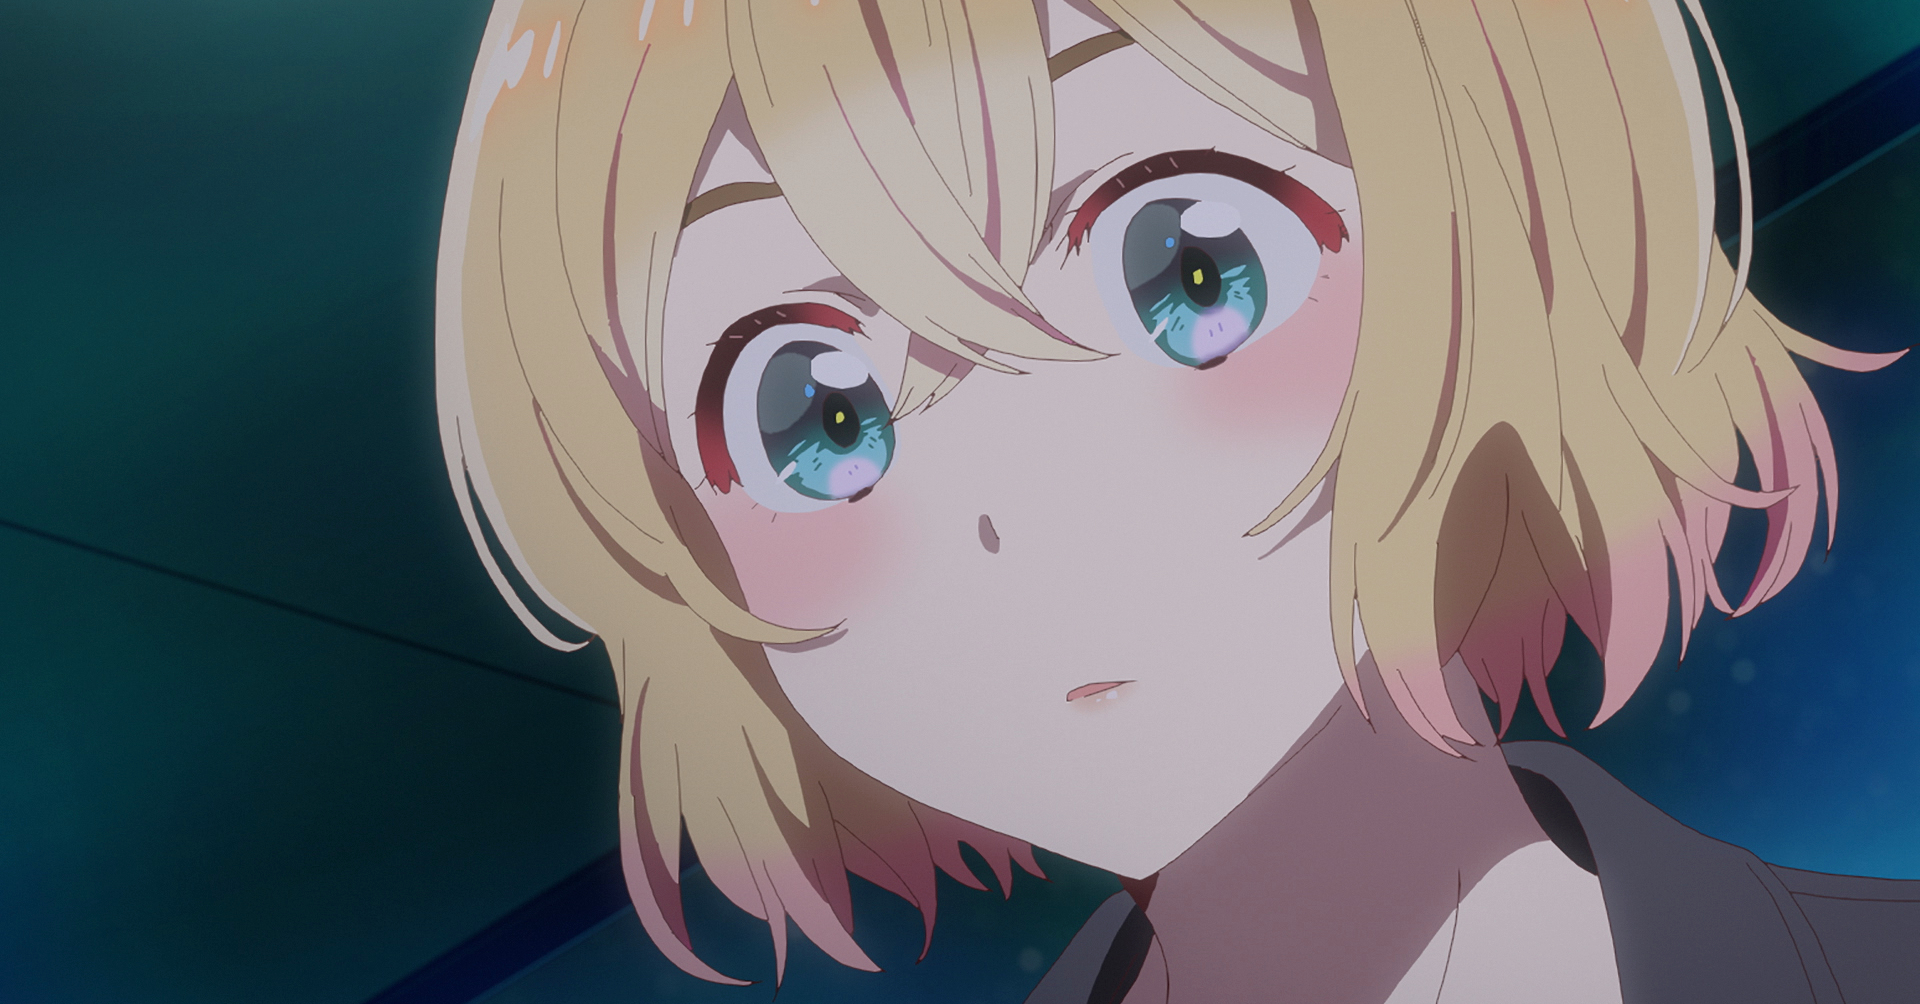 Rent a Girlfriend Season 2 Episode 3 Preview Released - Anime Corner